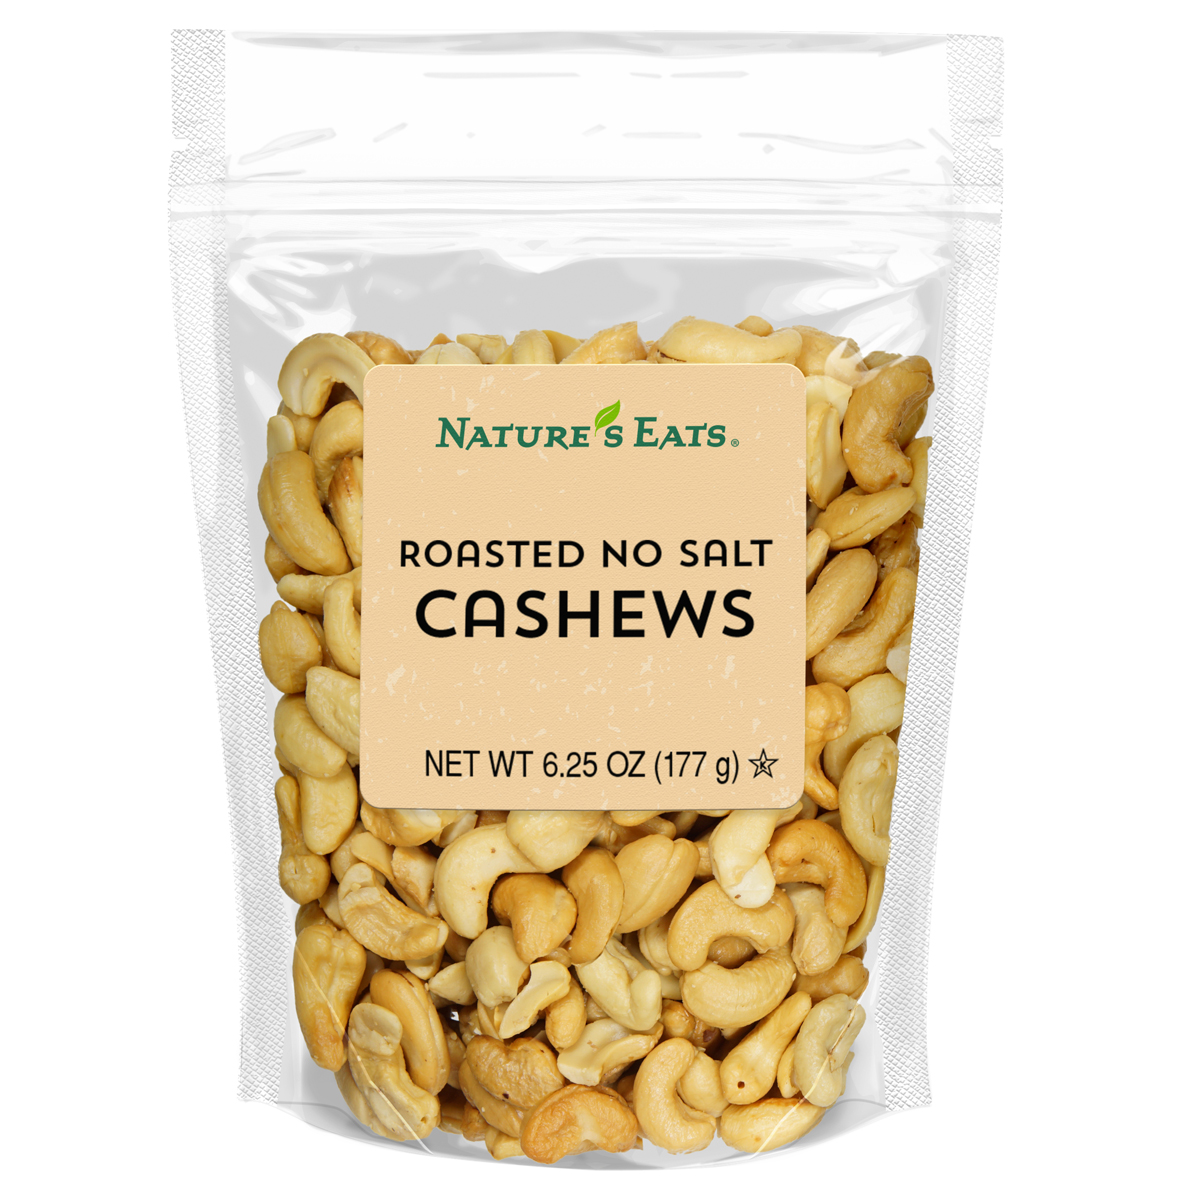 rns-cashews-nep-6.25oz.jpg